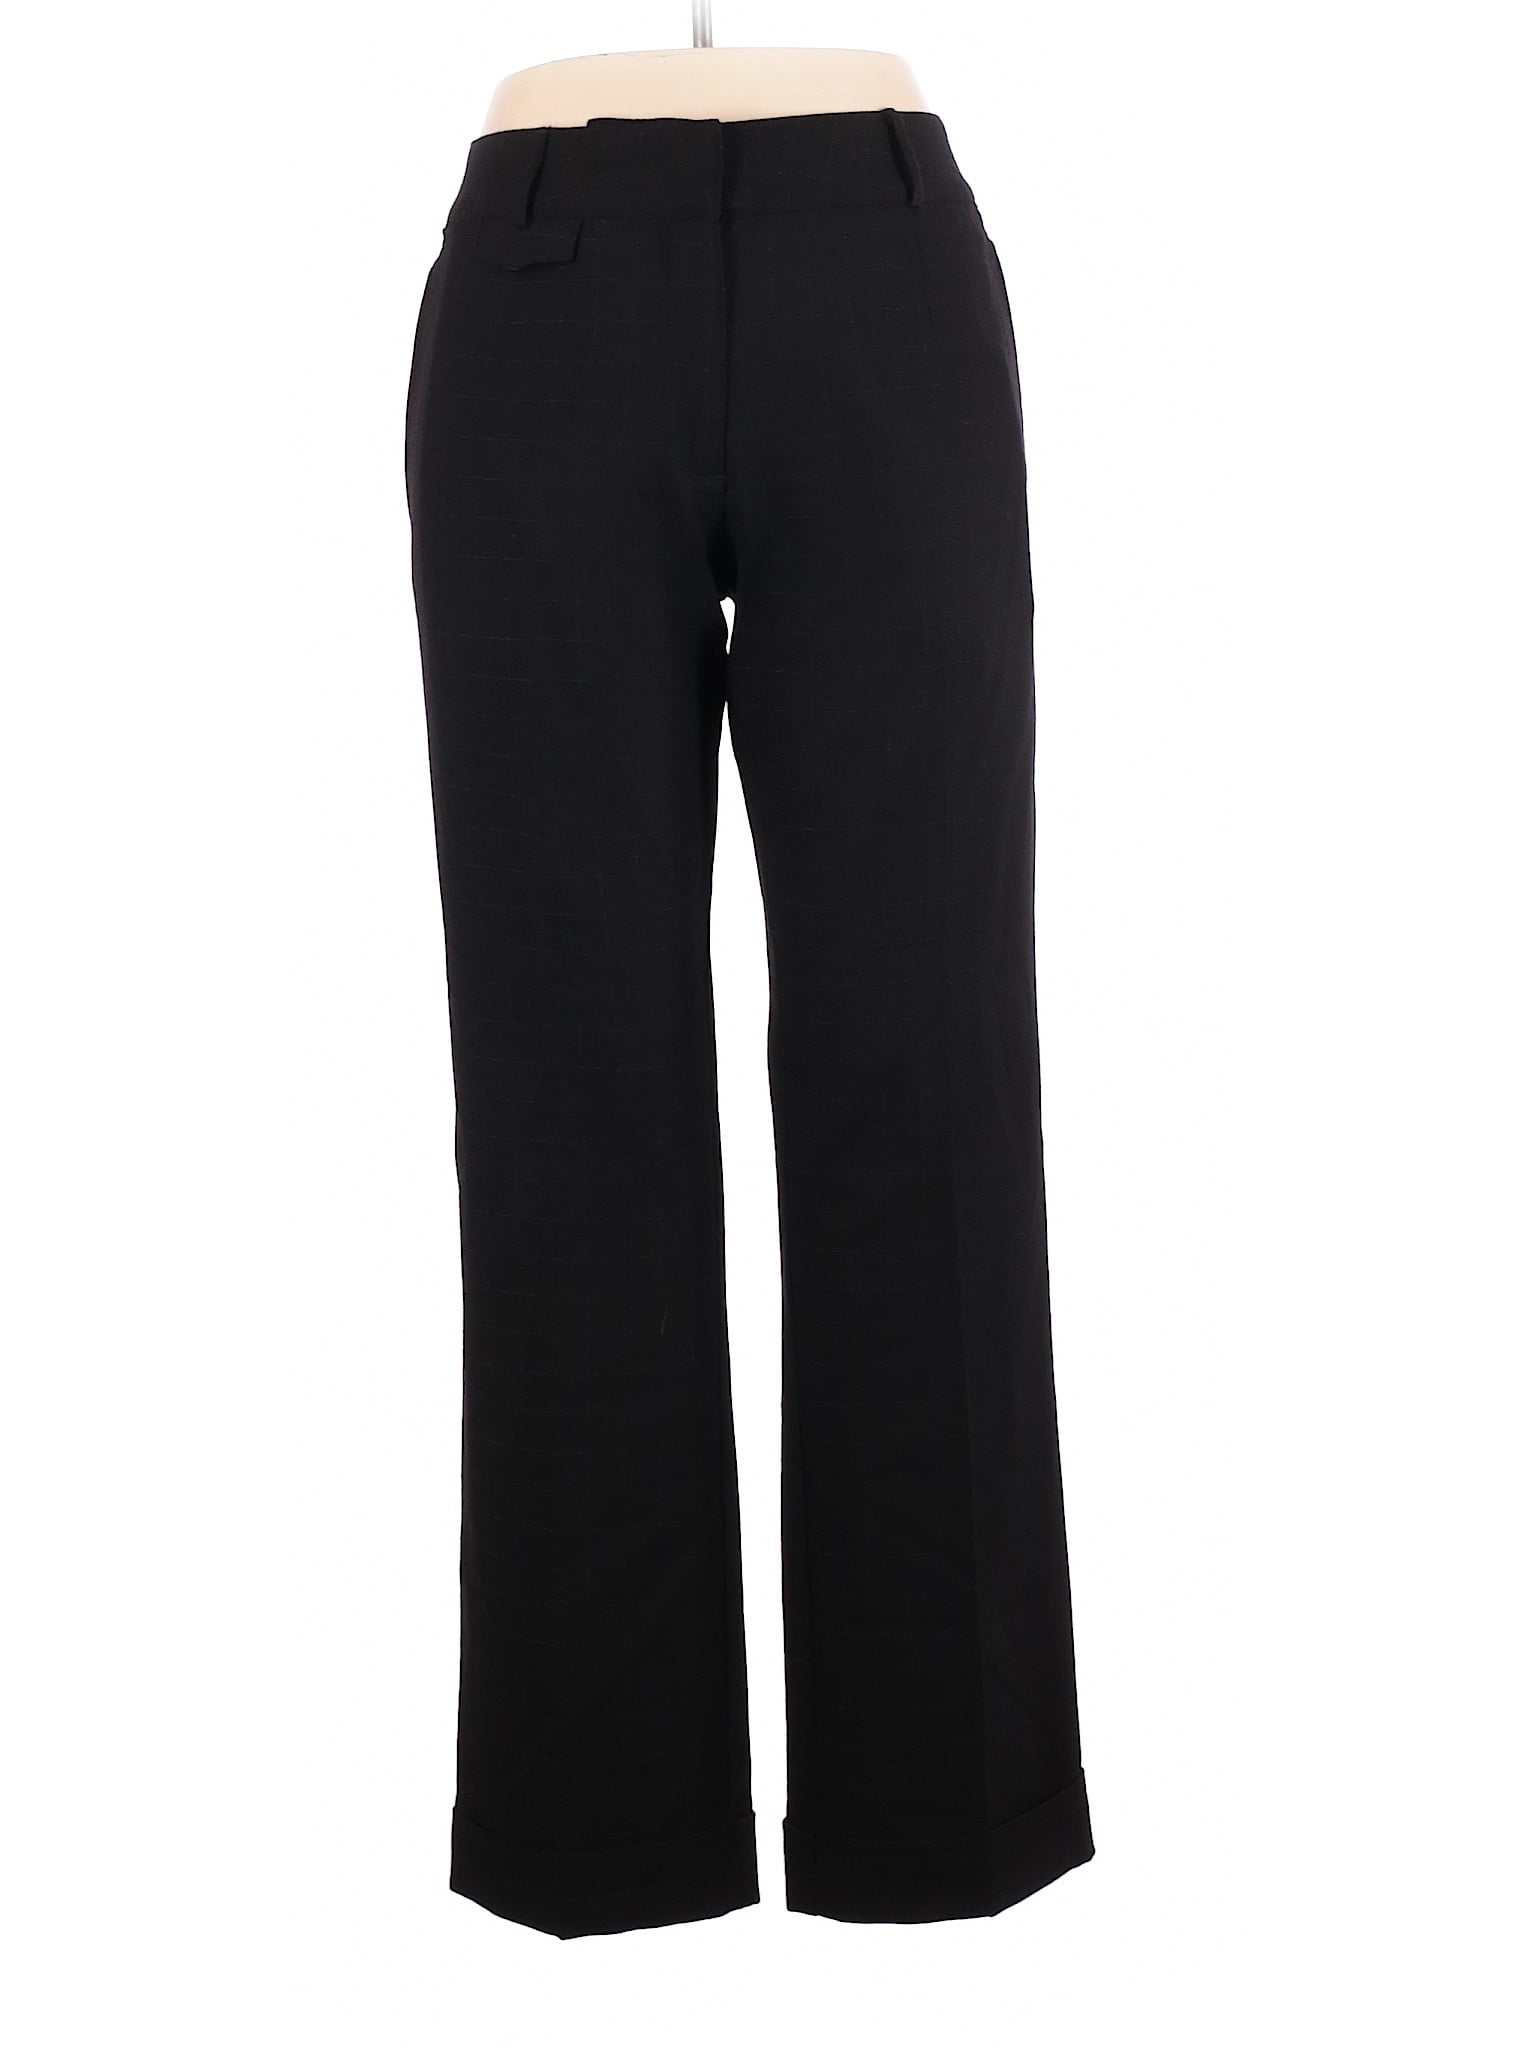 Pre-Owned Nike Golf Women's Size 10 Active Pants - Walmart.com ...